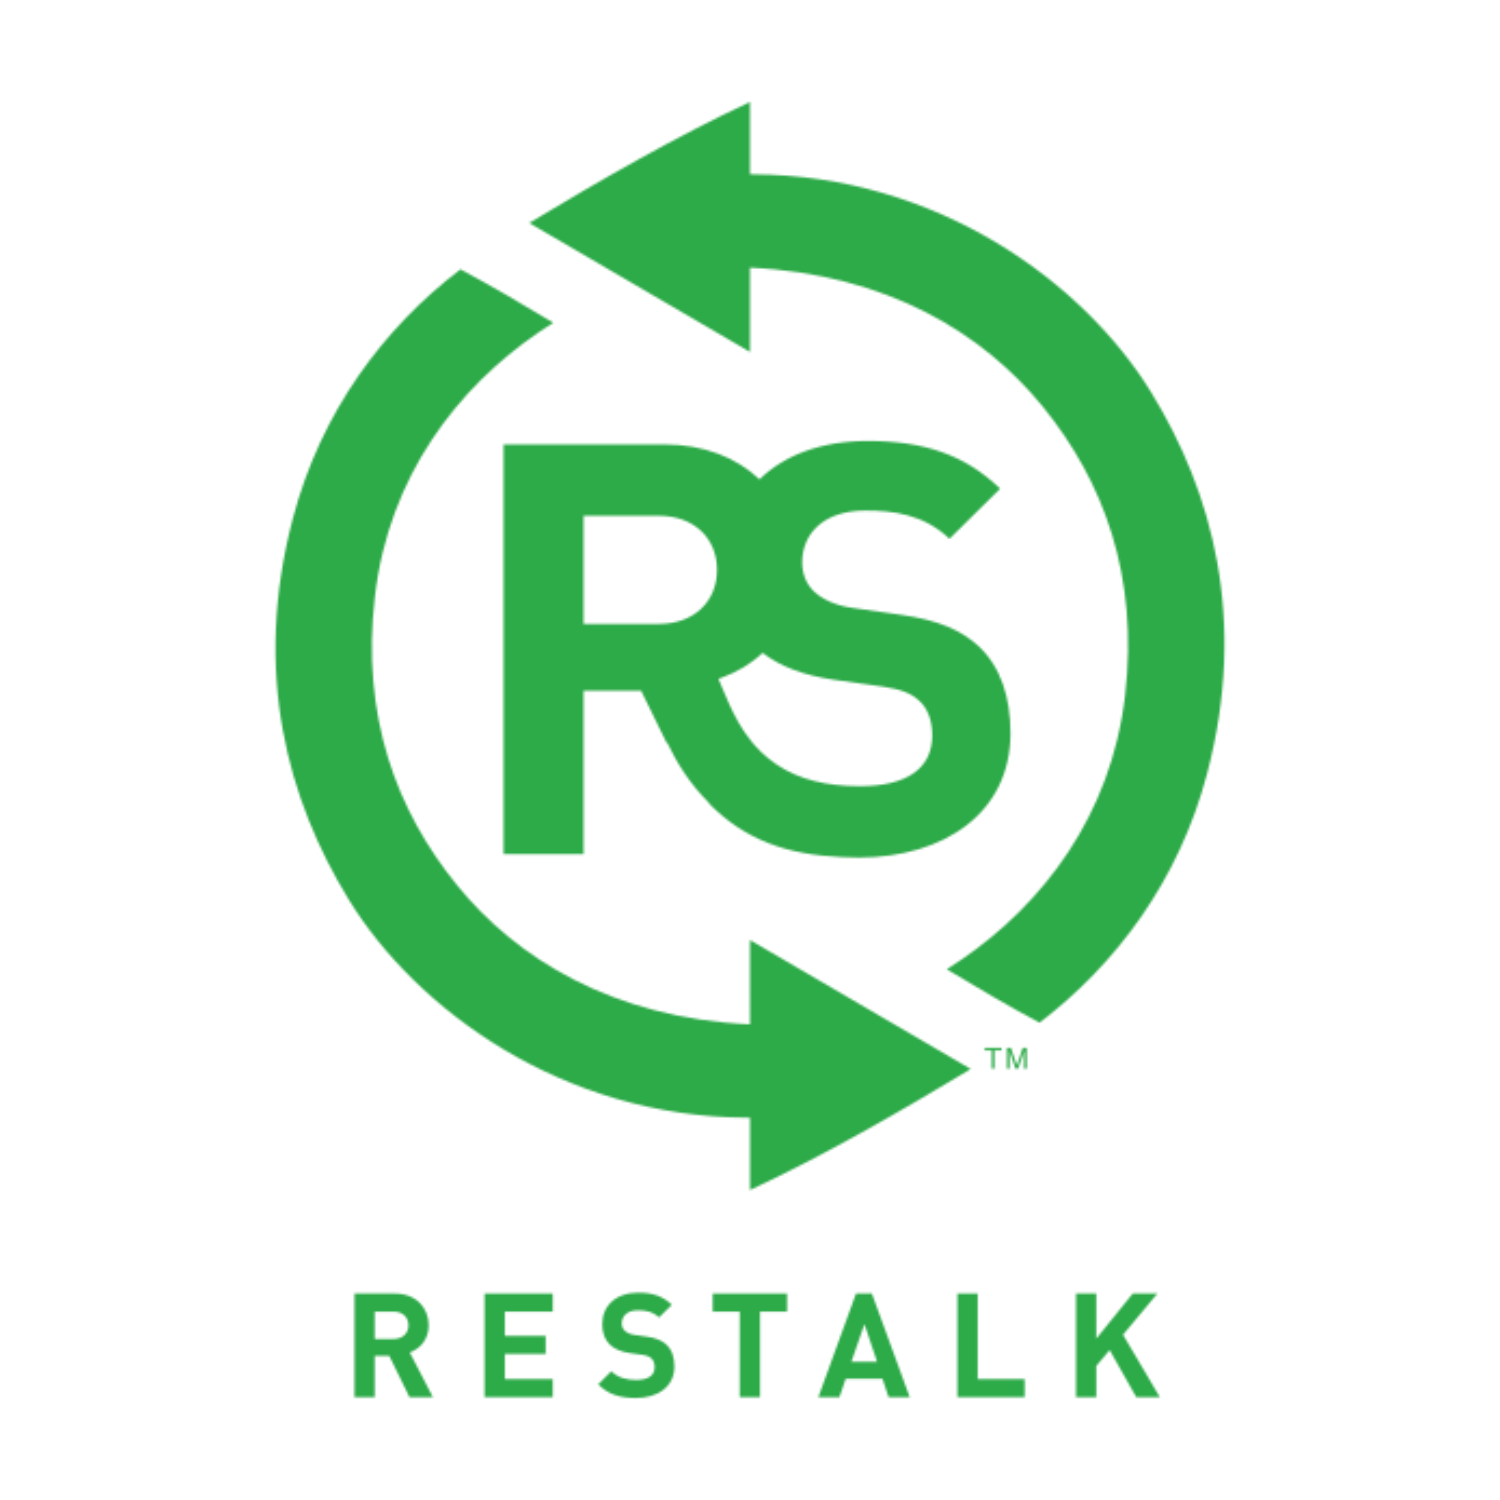 ReStalk- Tree Free Fiber Solutions For A Net Positive Future